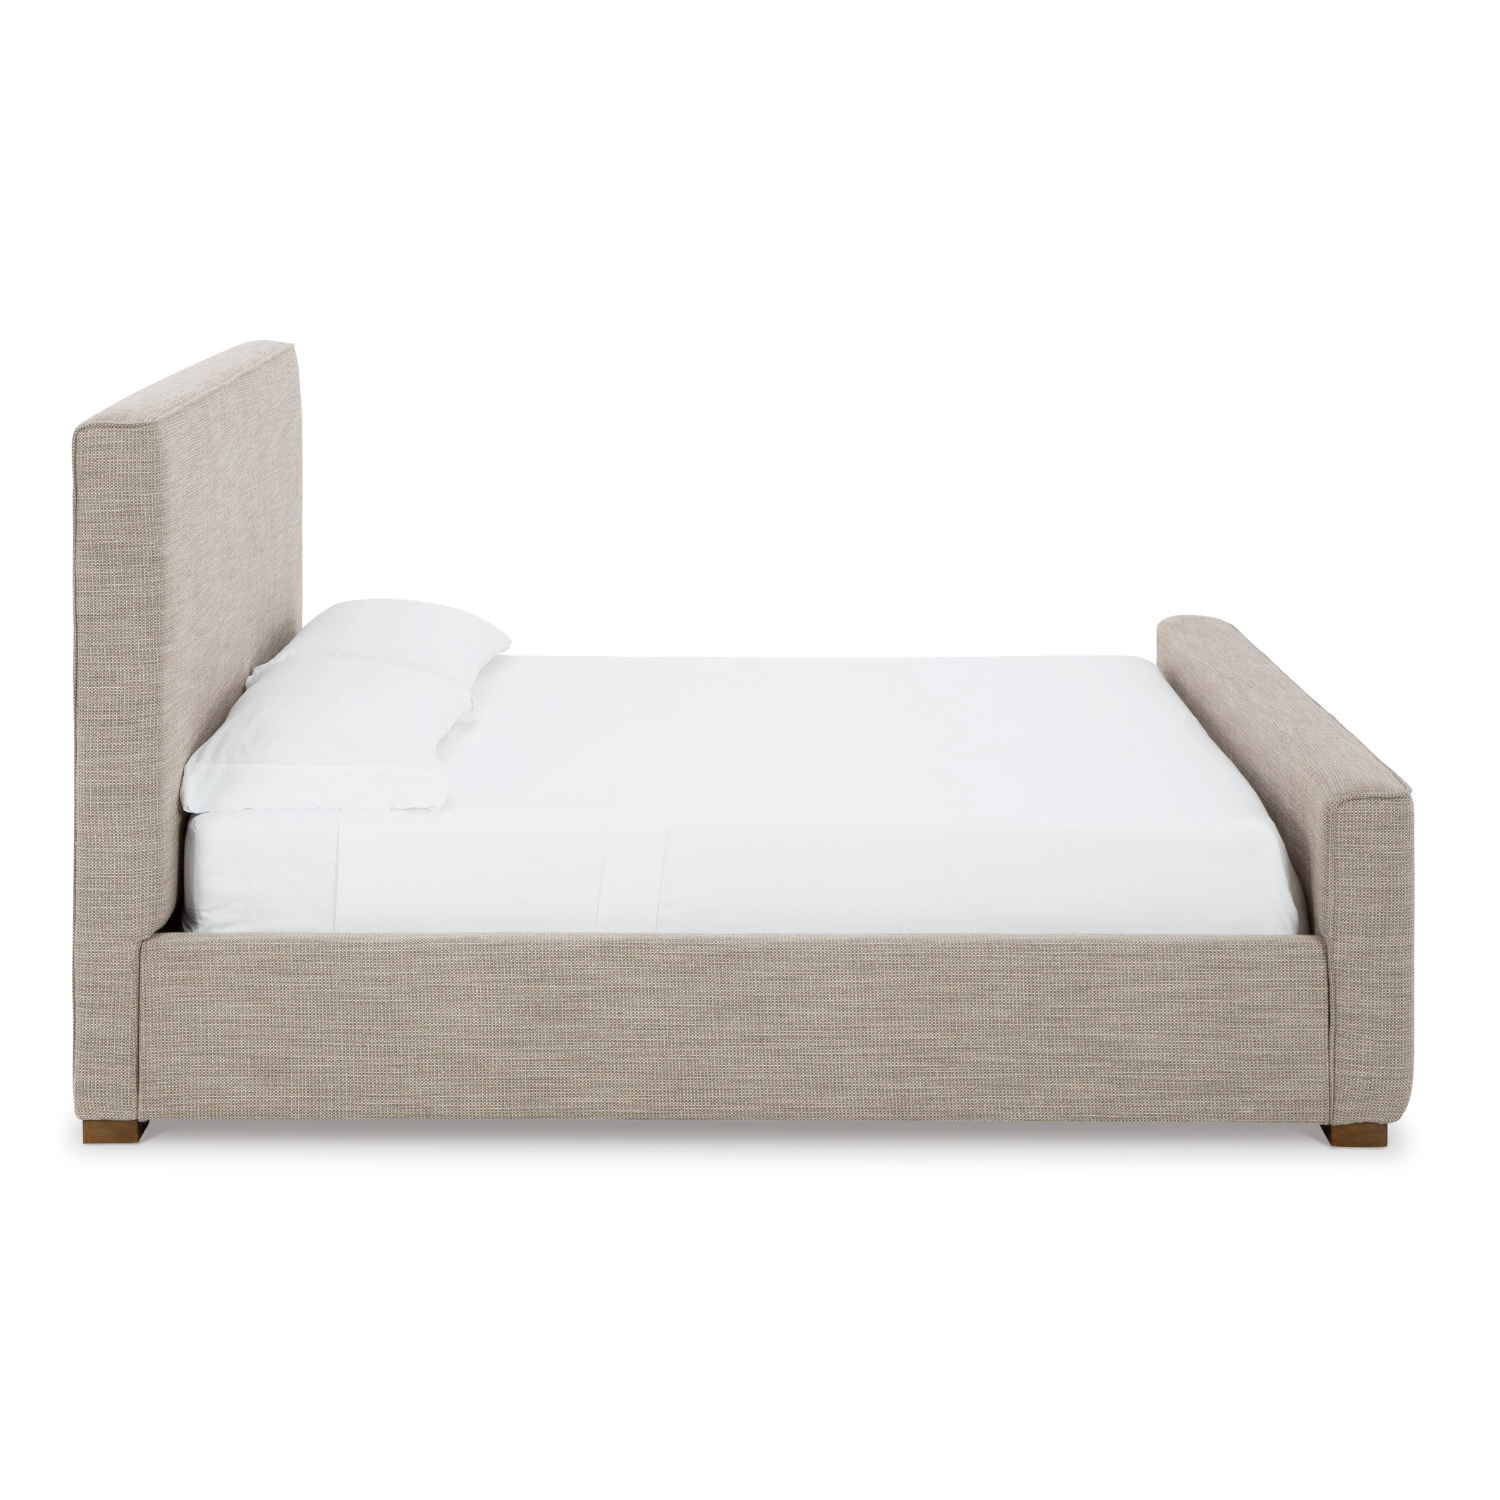 Dakmore Brown/Oatmeal Upholstered Panel Bedroom Set